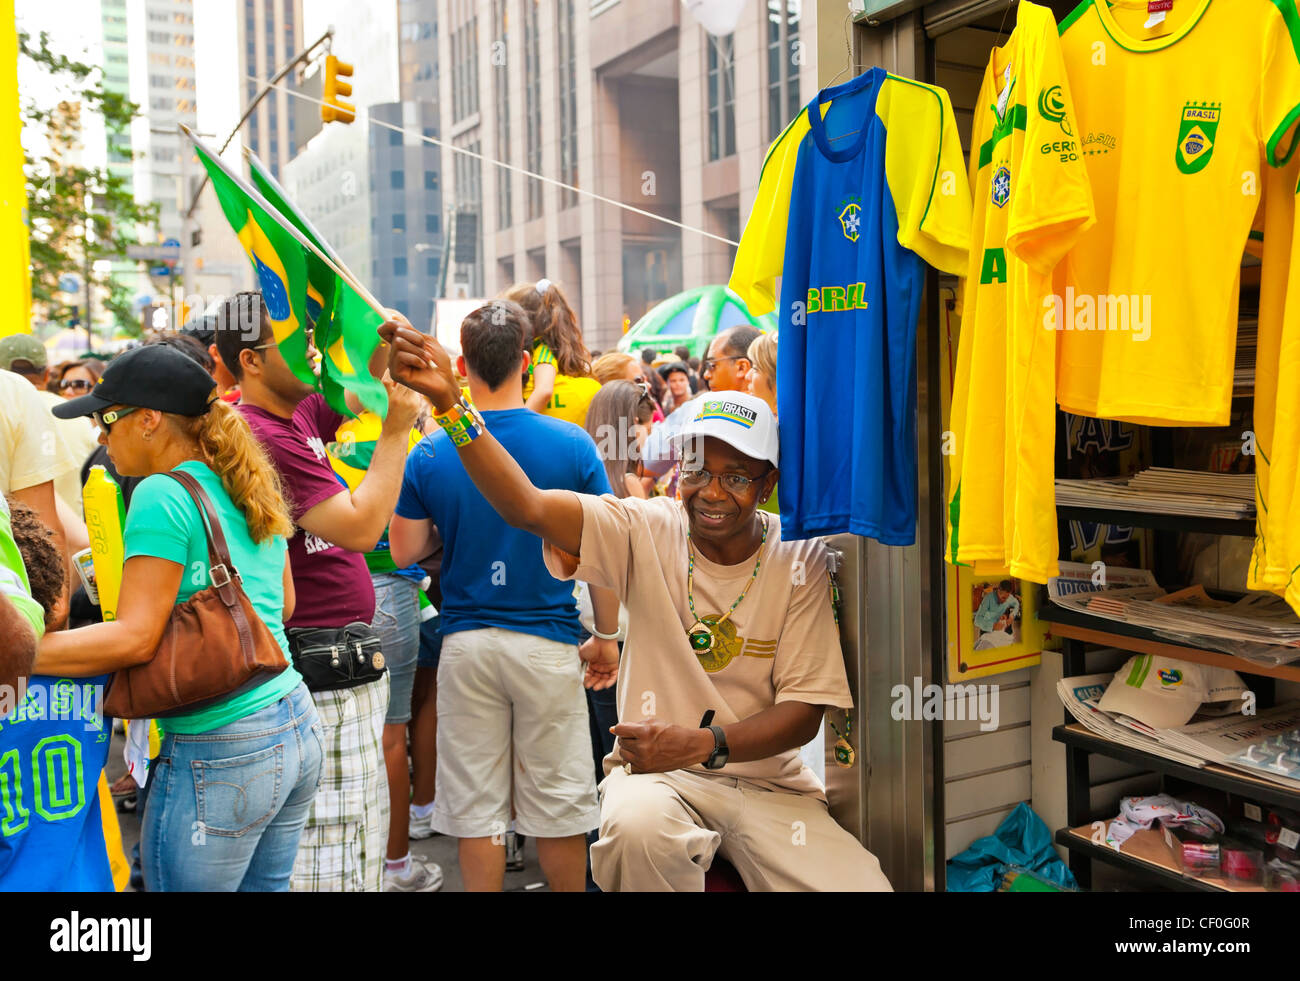 Brazilian Independence Day Festival - Boston